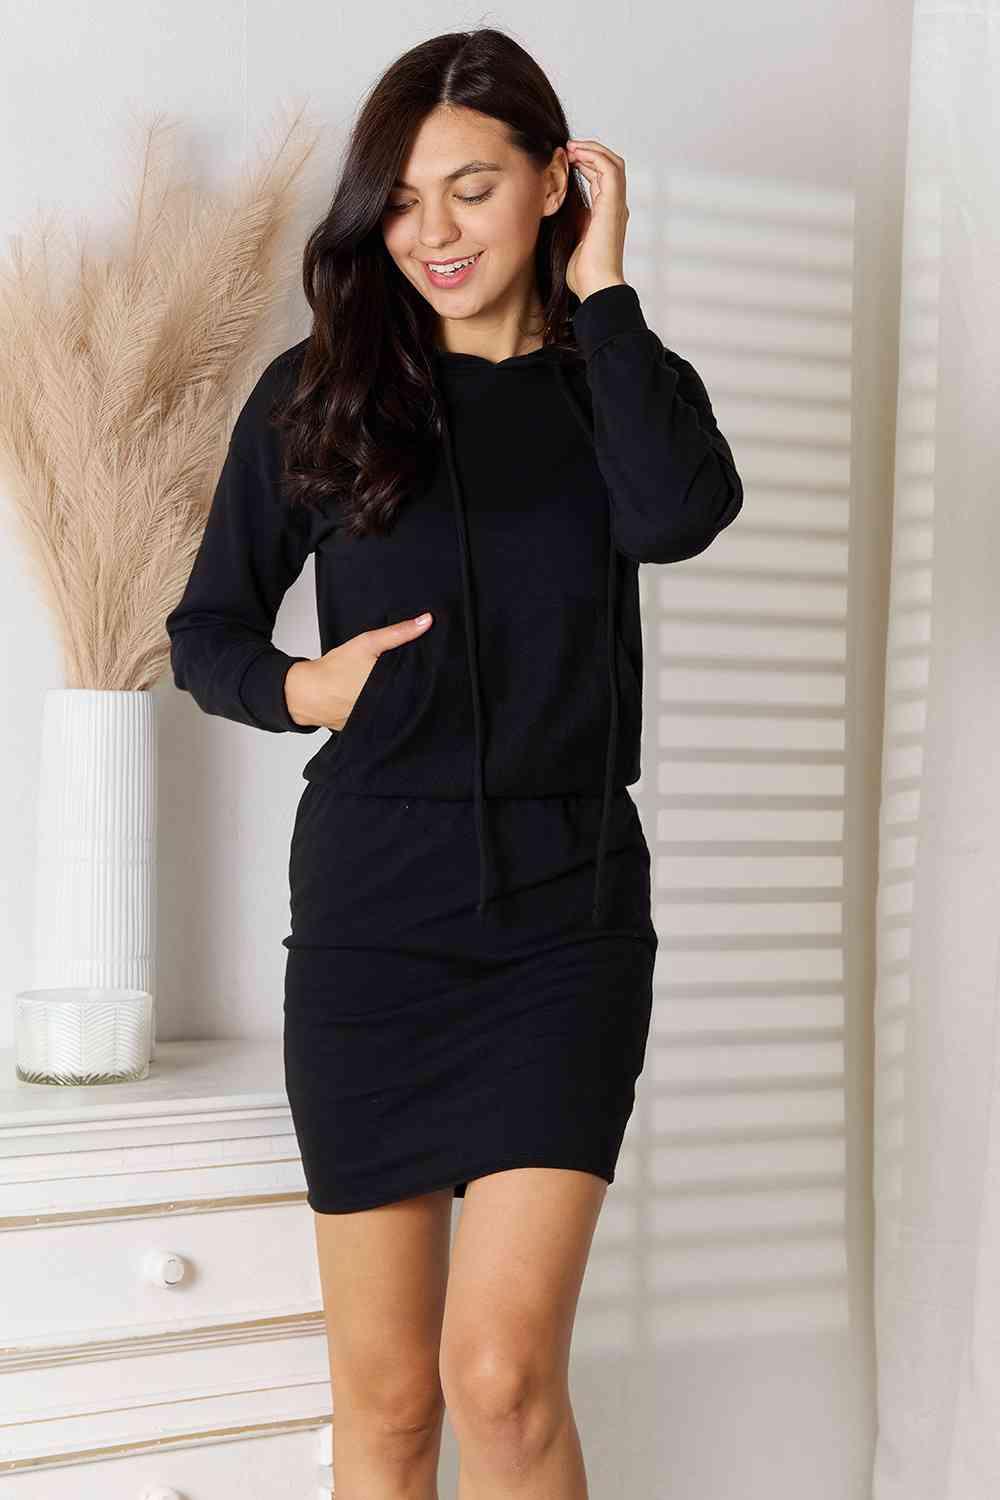 Long Sleeve Black Plus Size Hooded Dress - MXSTUDIO.COM